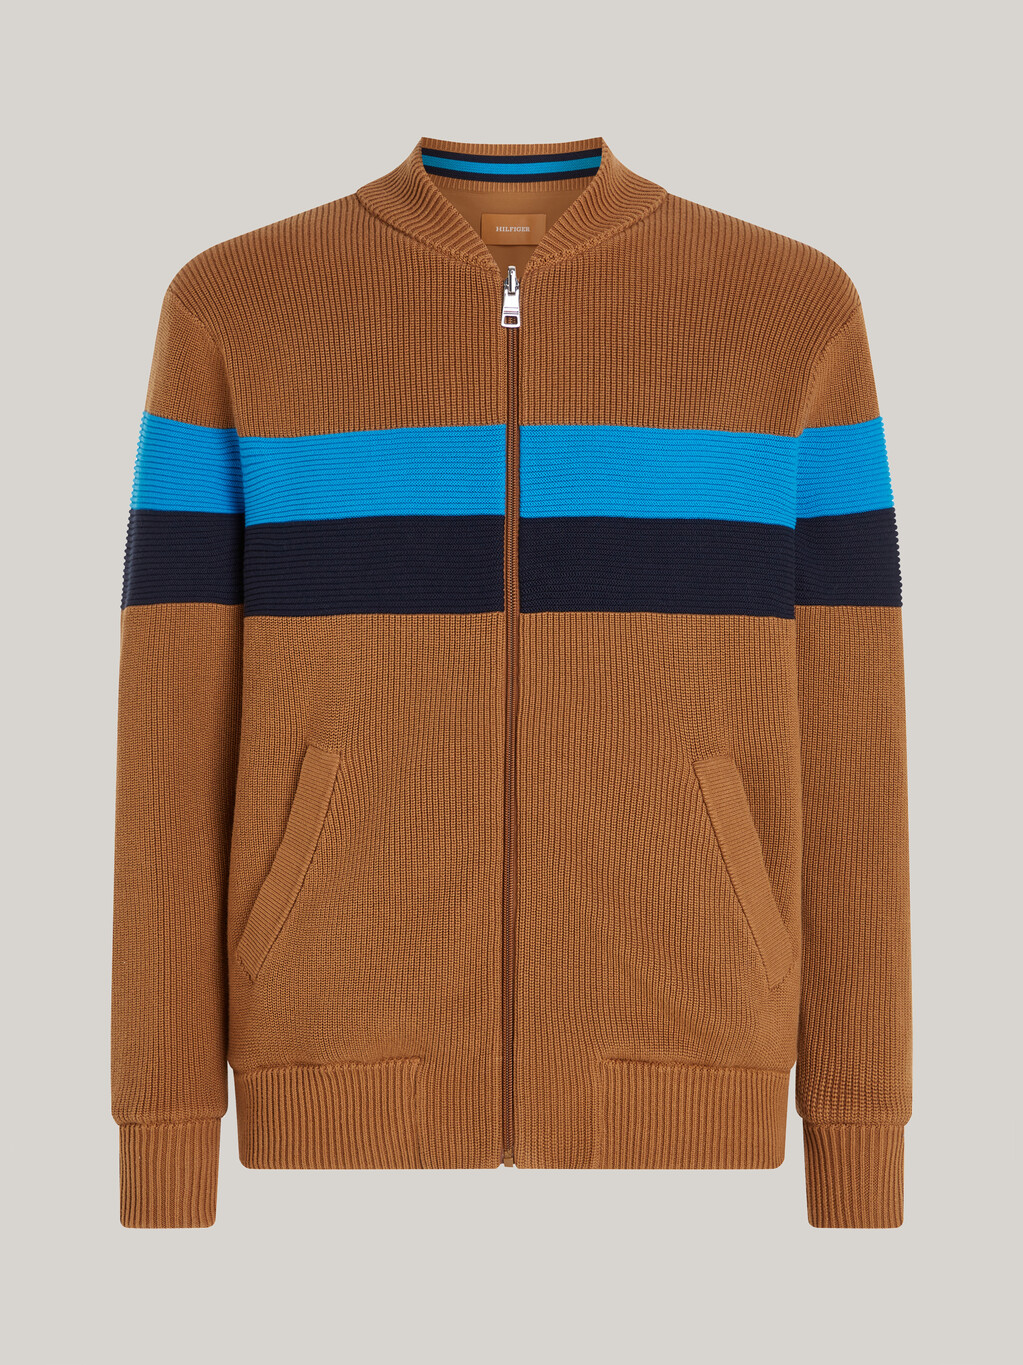 Reversible Windproof Zip Up Sweater, Desert Khaki/Dsrt Sky/Cerulean Blue, hi-res